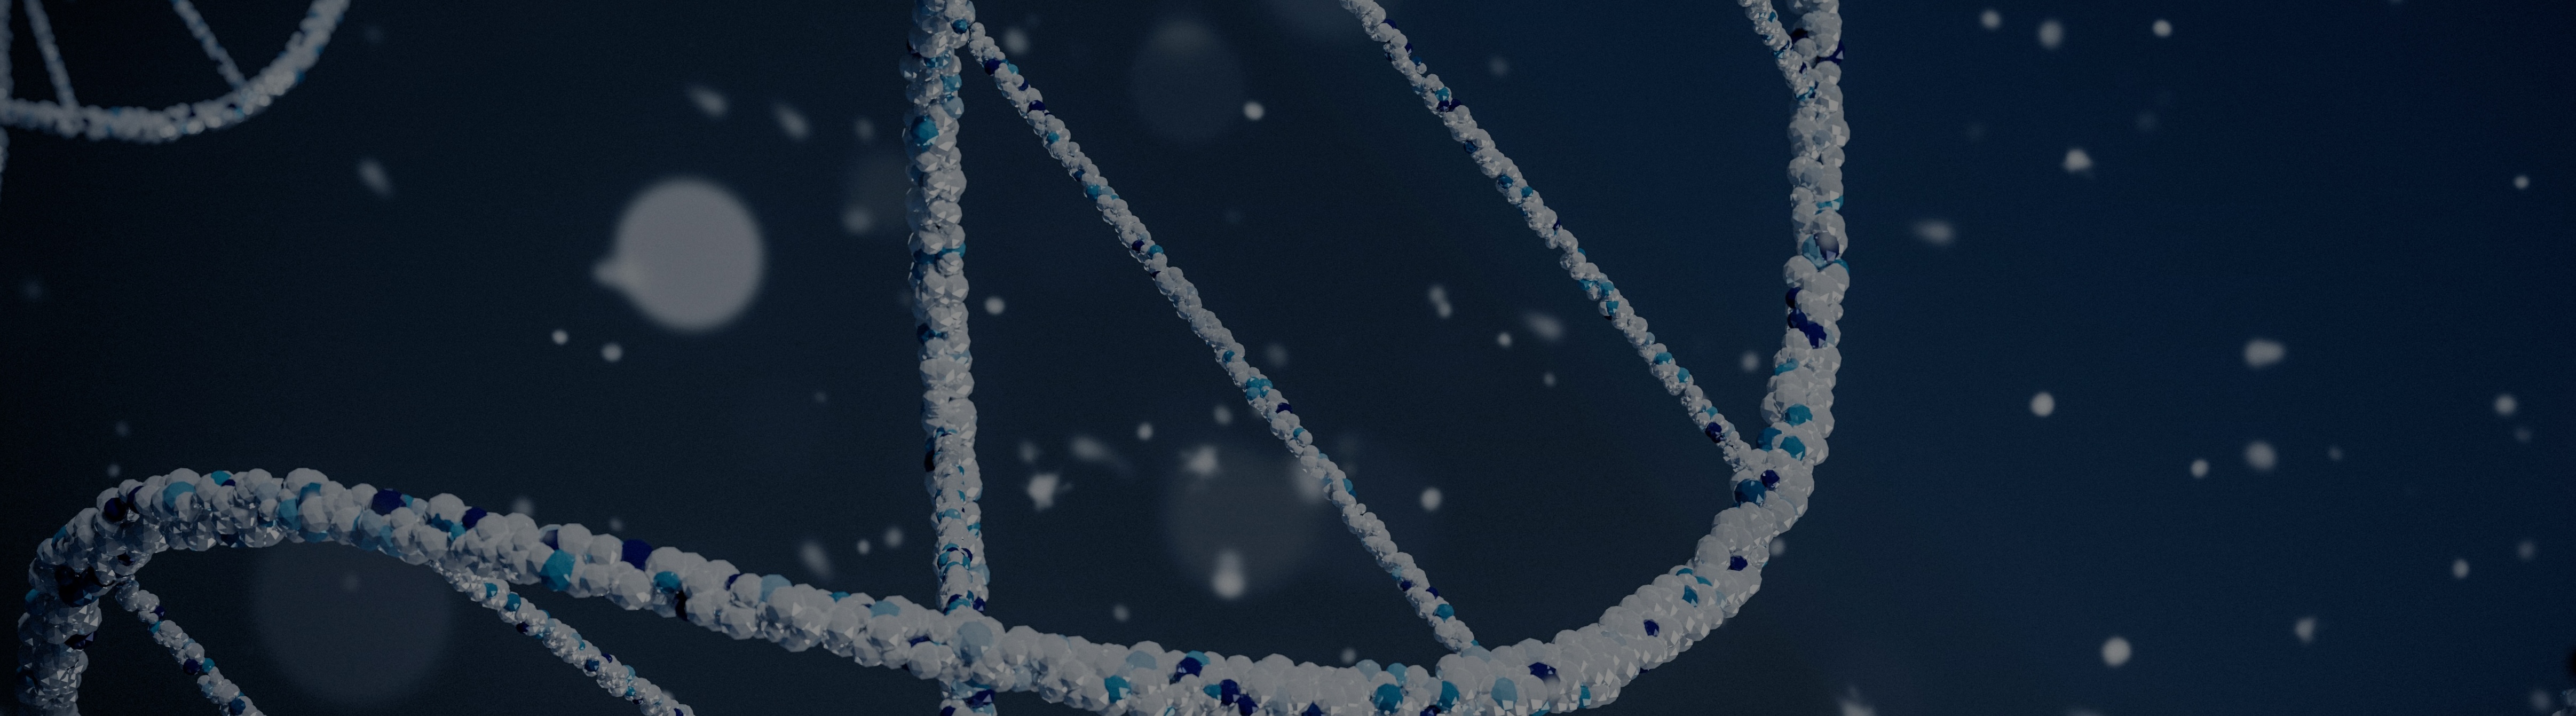 DNA Background Image